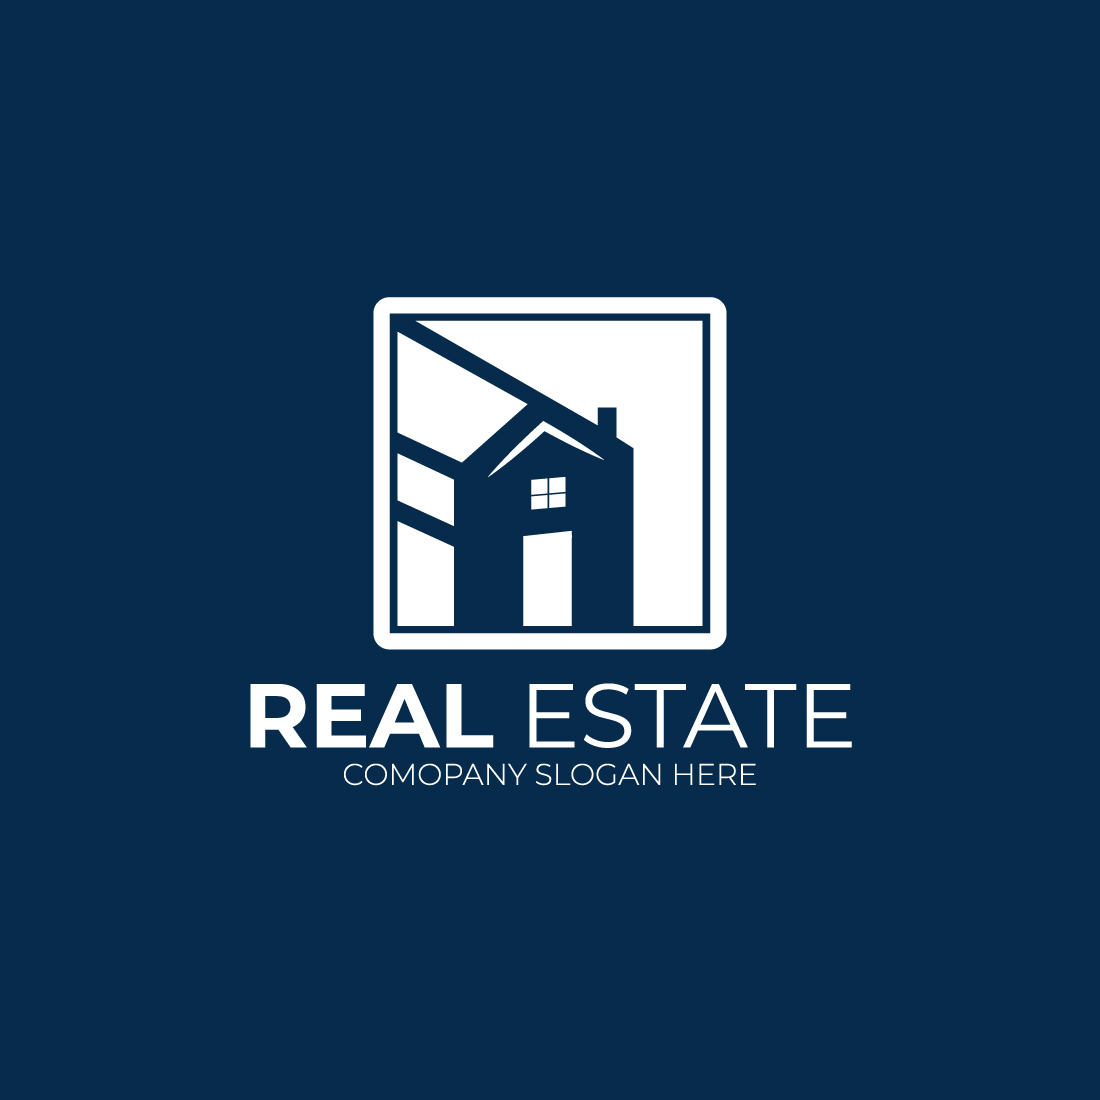 Real estate logo design vector template preview image.